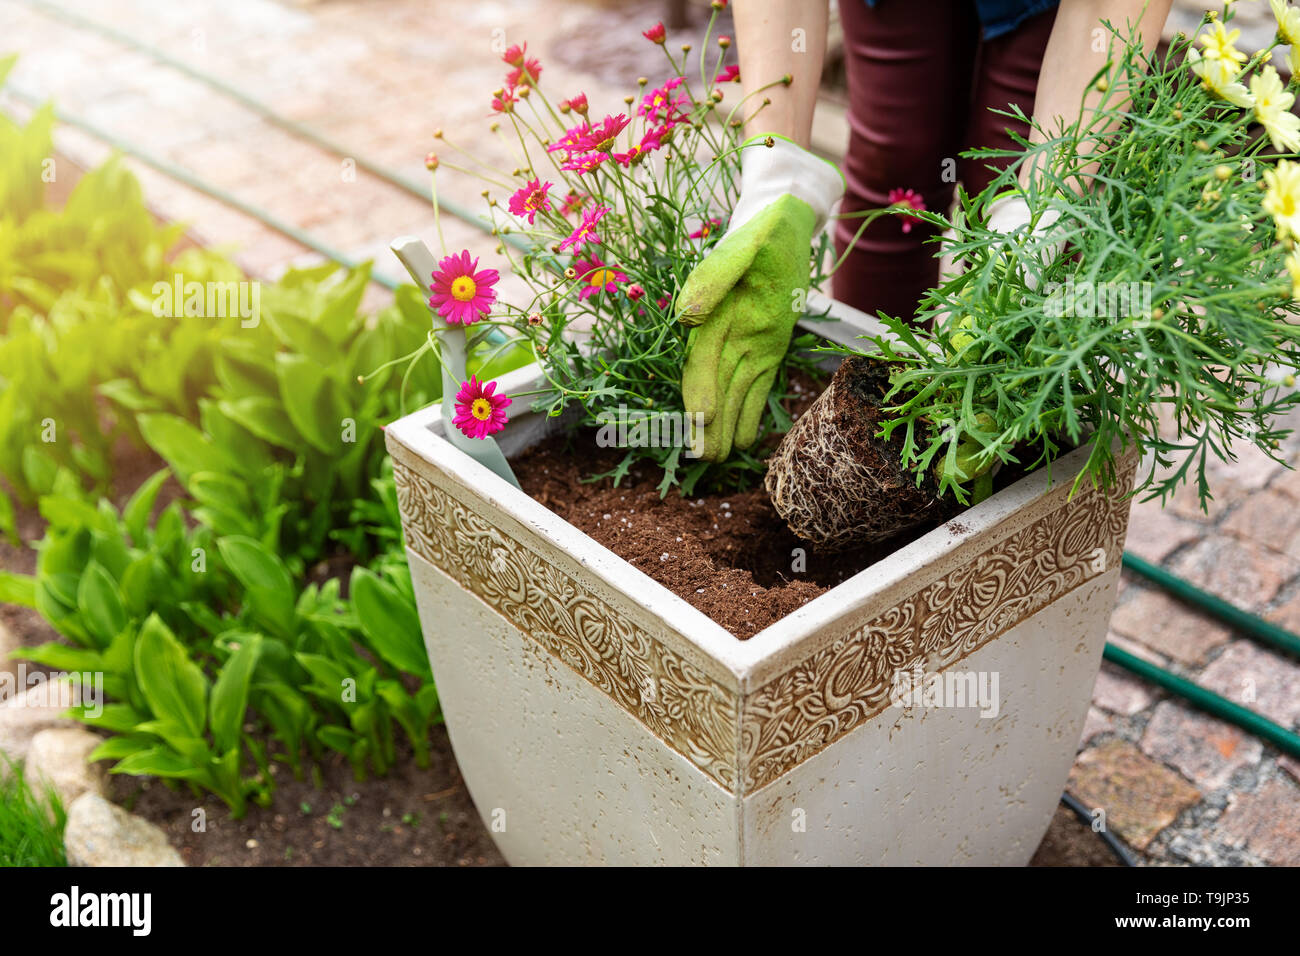 gardener planting summer flowers in flowerpot outdoors at home garden Stock Photo